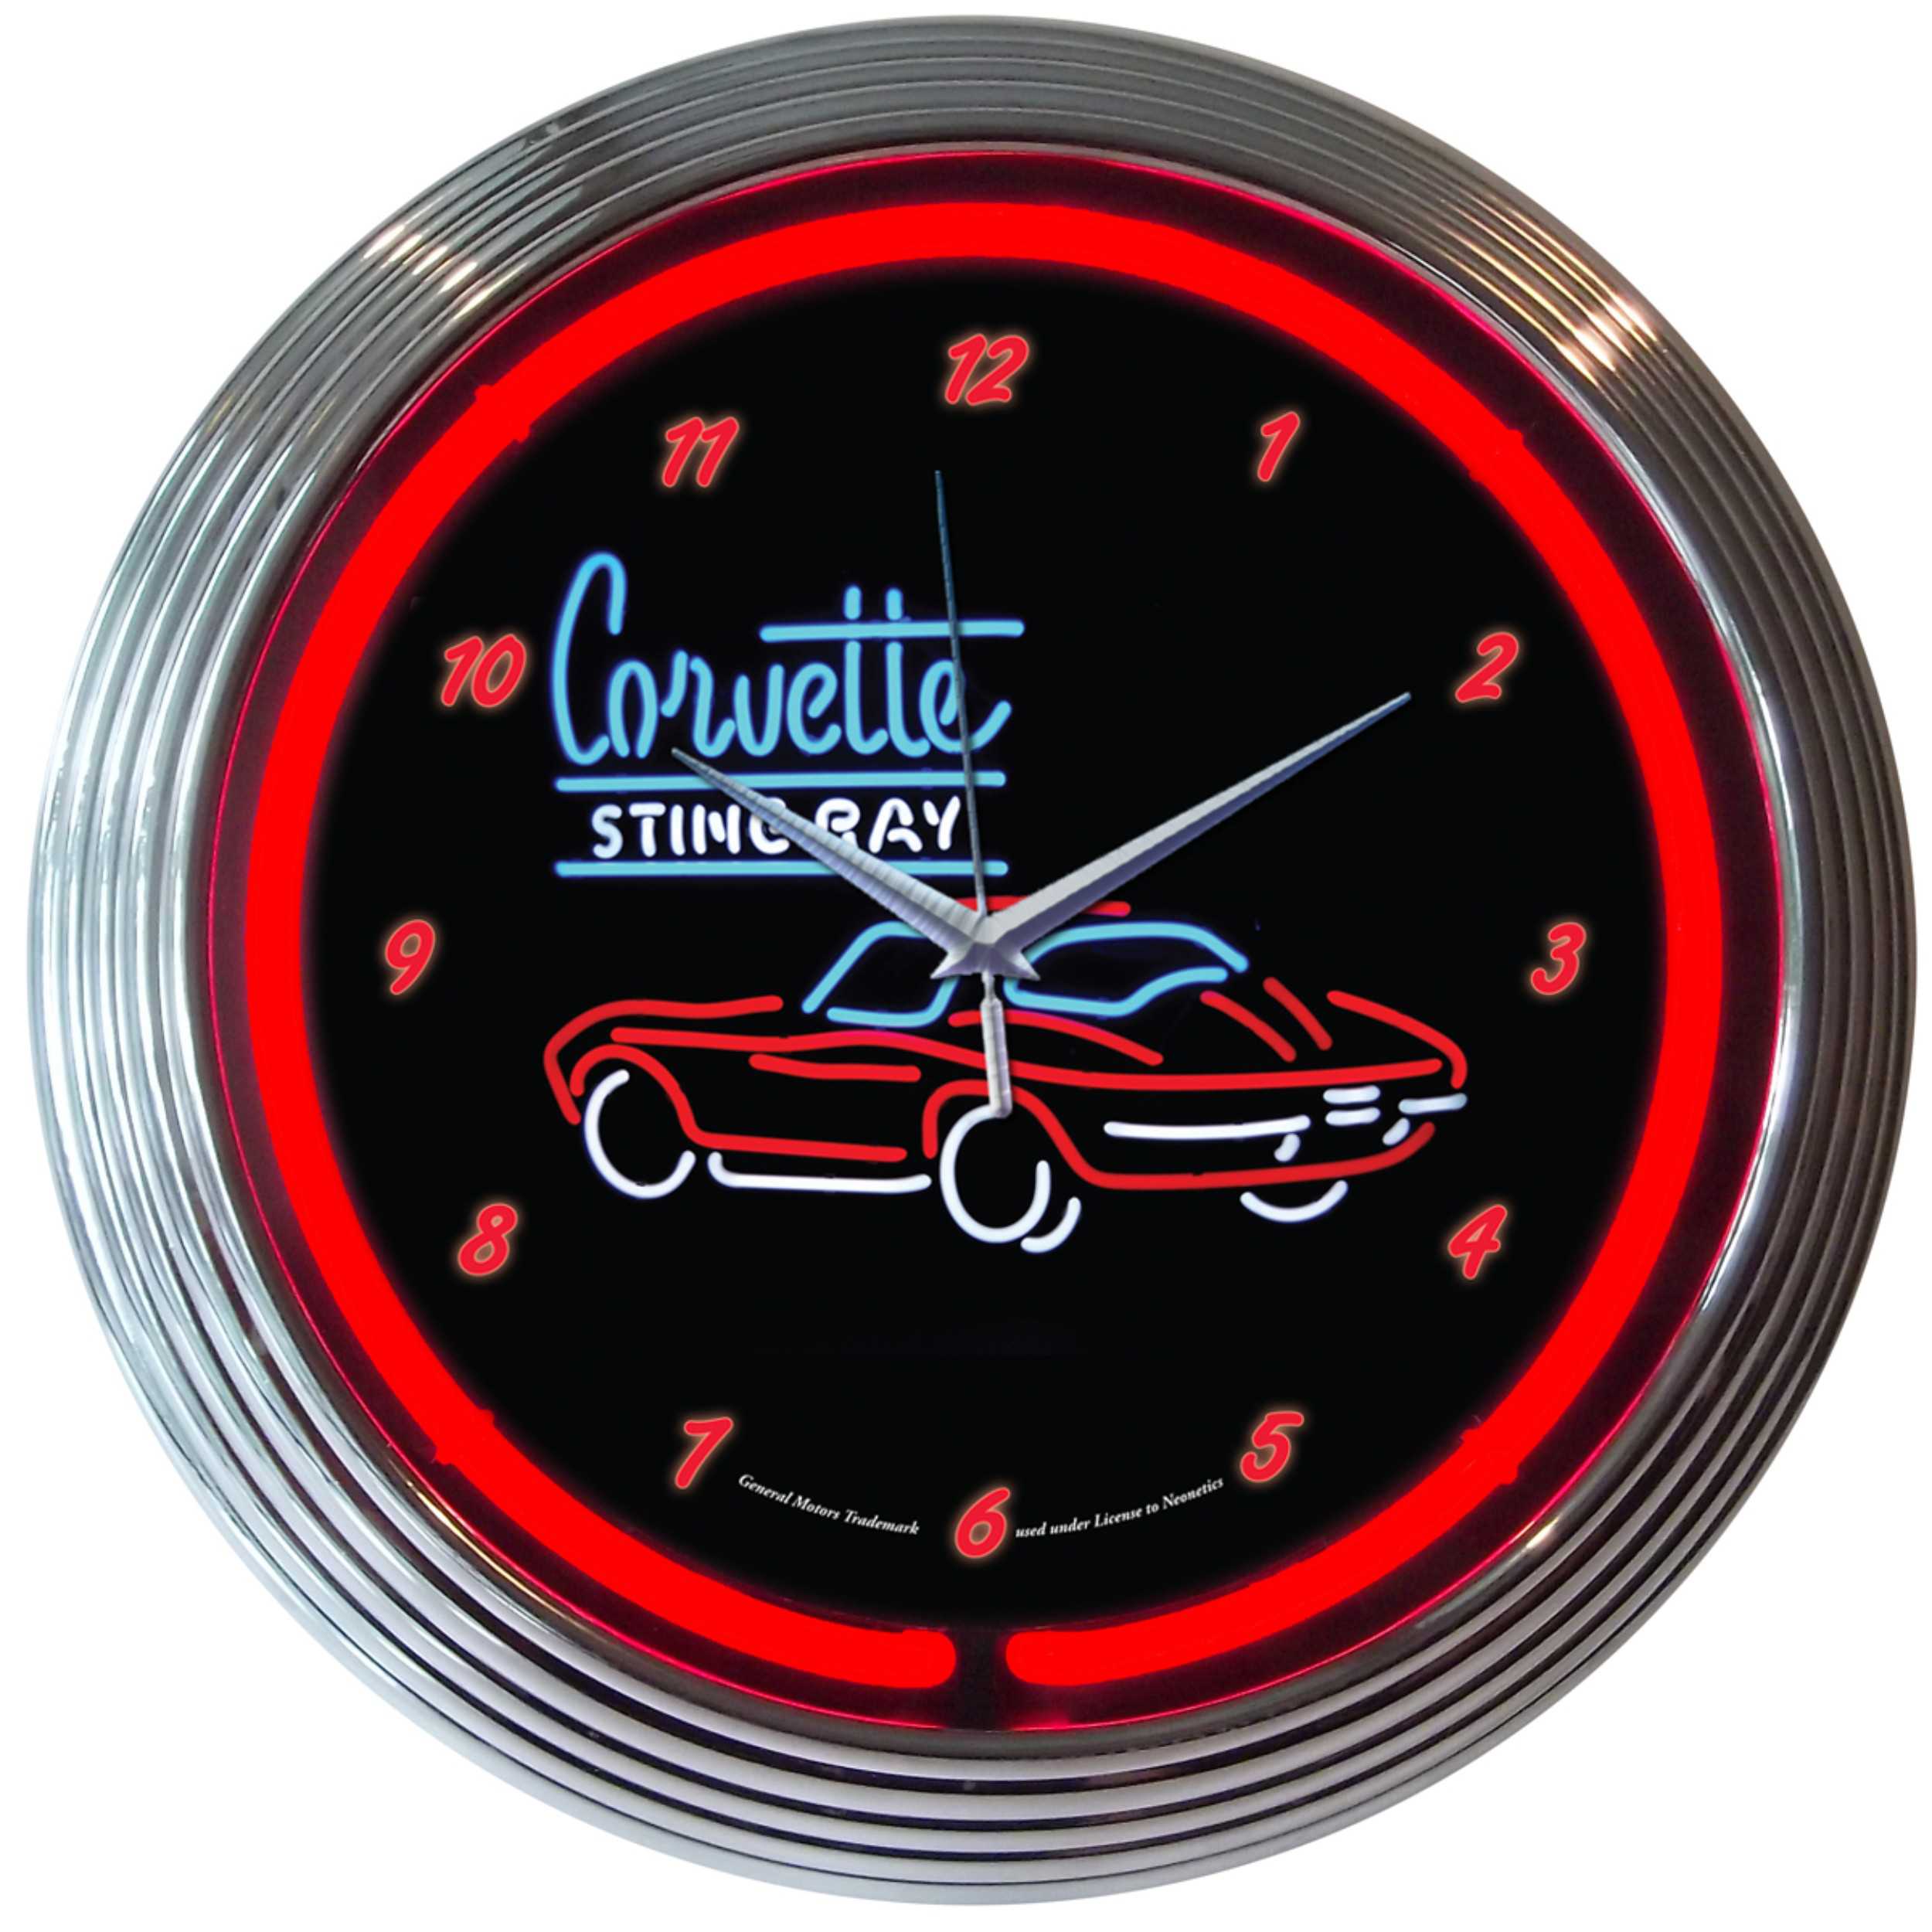 Chevrolet Corvette Flags C5 neon clock sign Dads Garage Mancave wall lamp light 